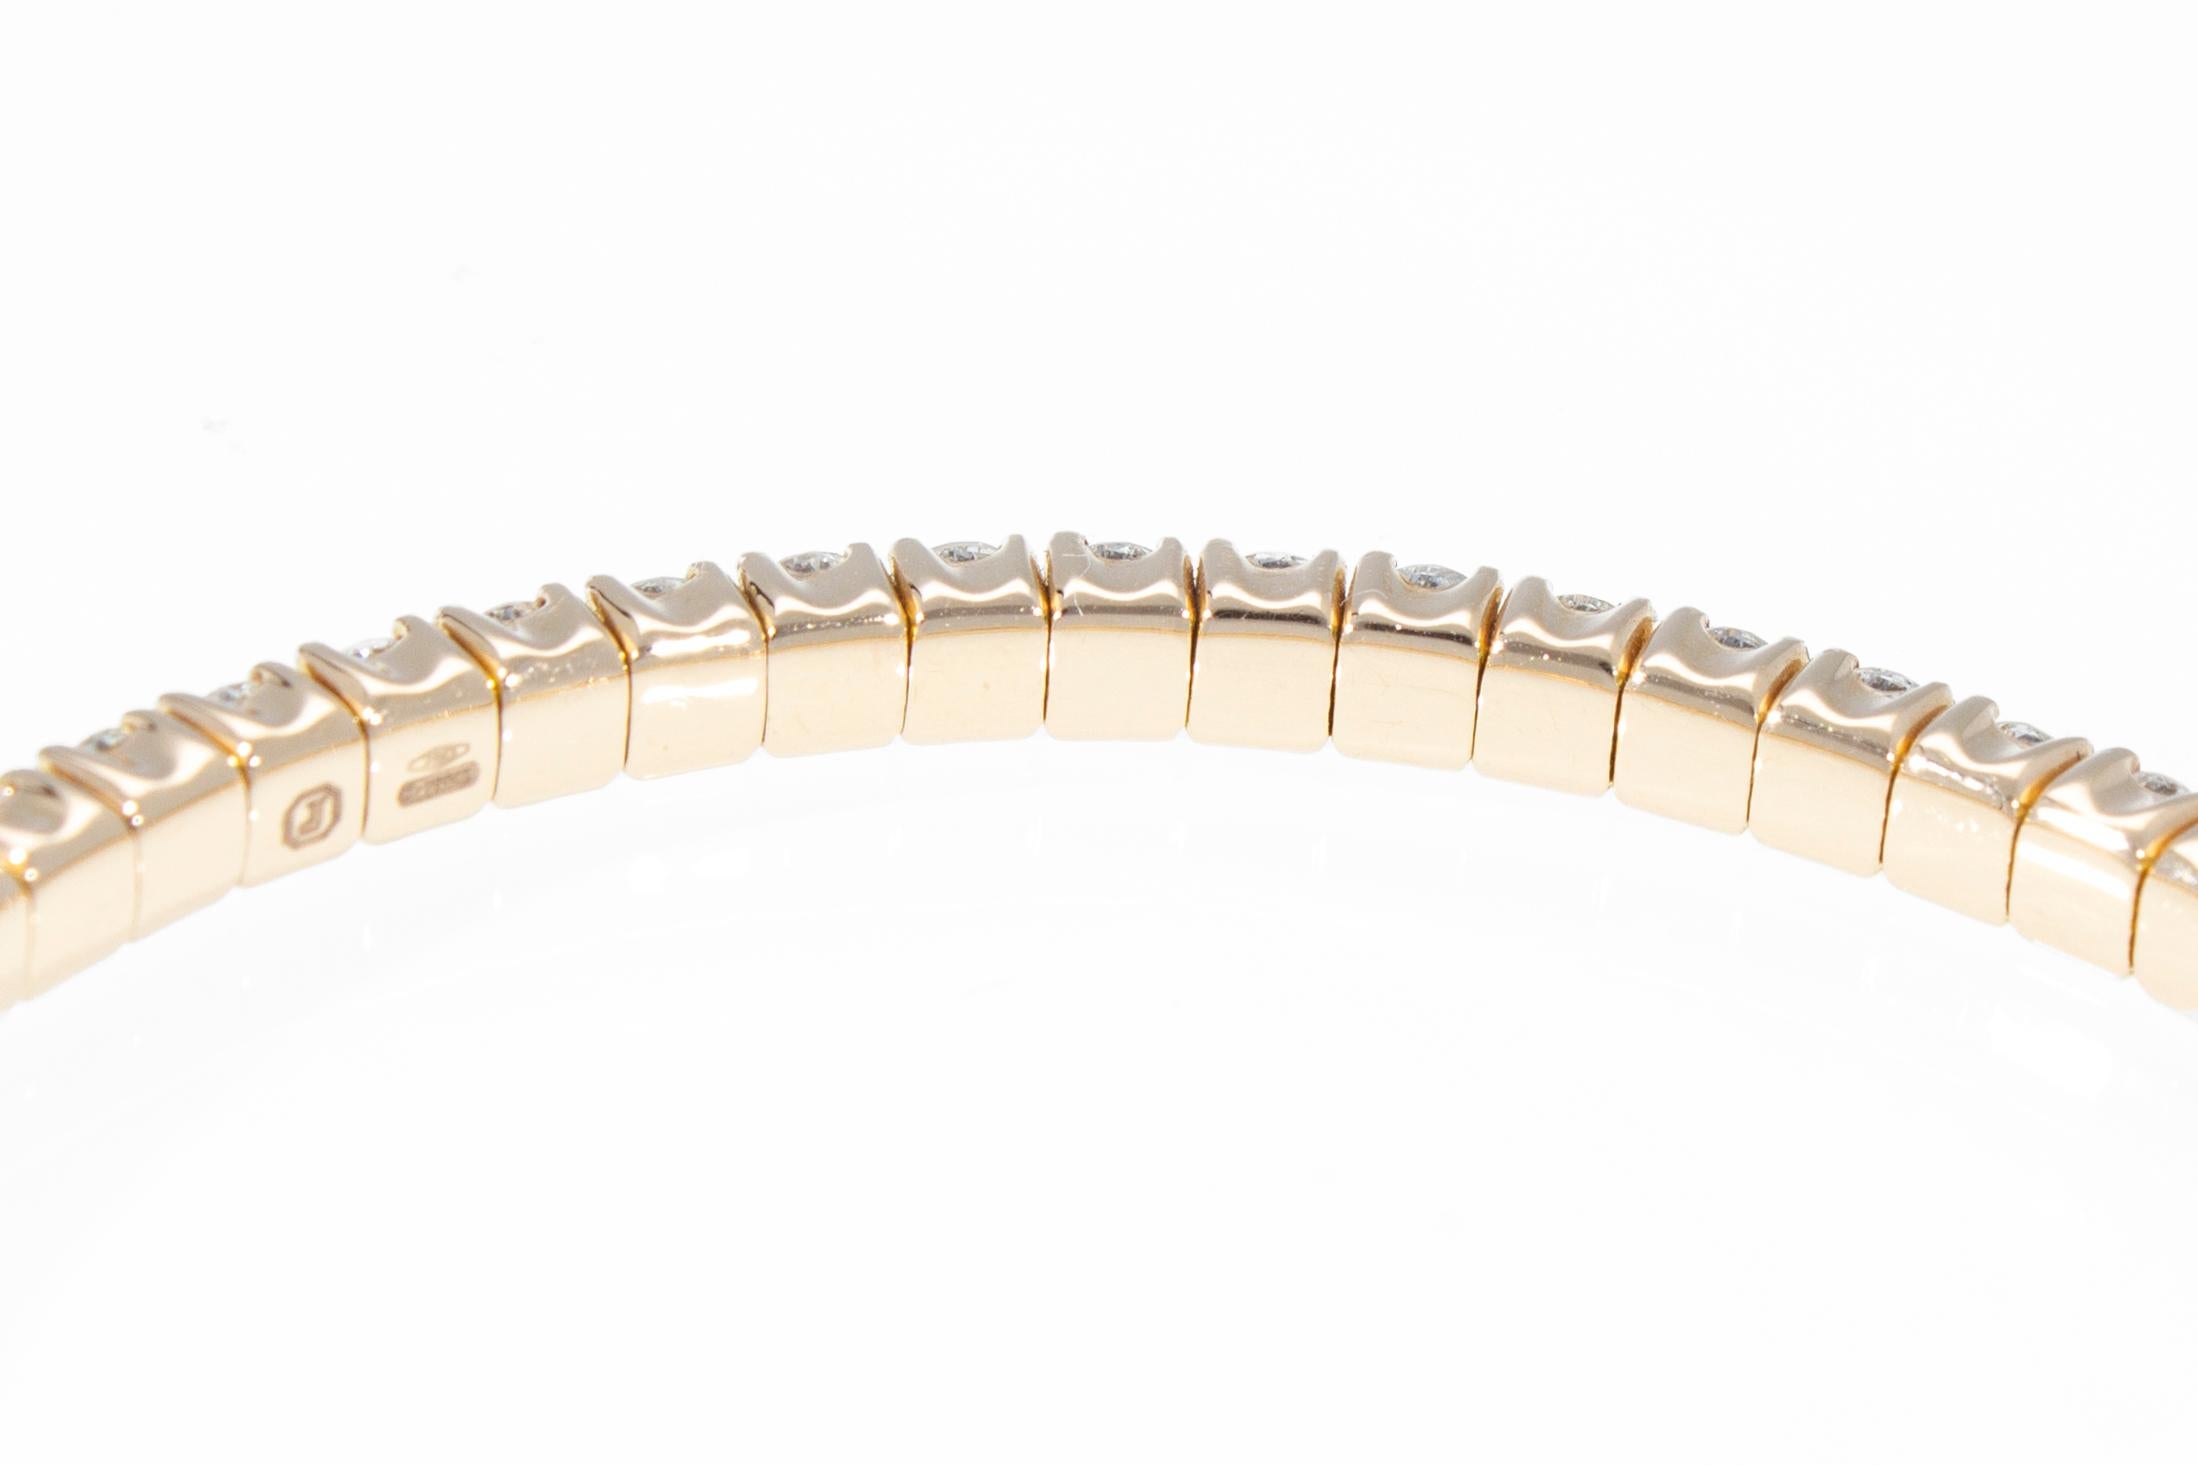 Brilliant Cut Carat 4.11 Elastic Diamond Tennis Bracelet. Rose Gold 18 Kt. Made in Italy. For Sale